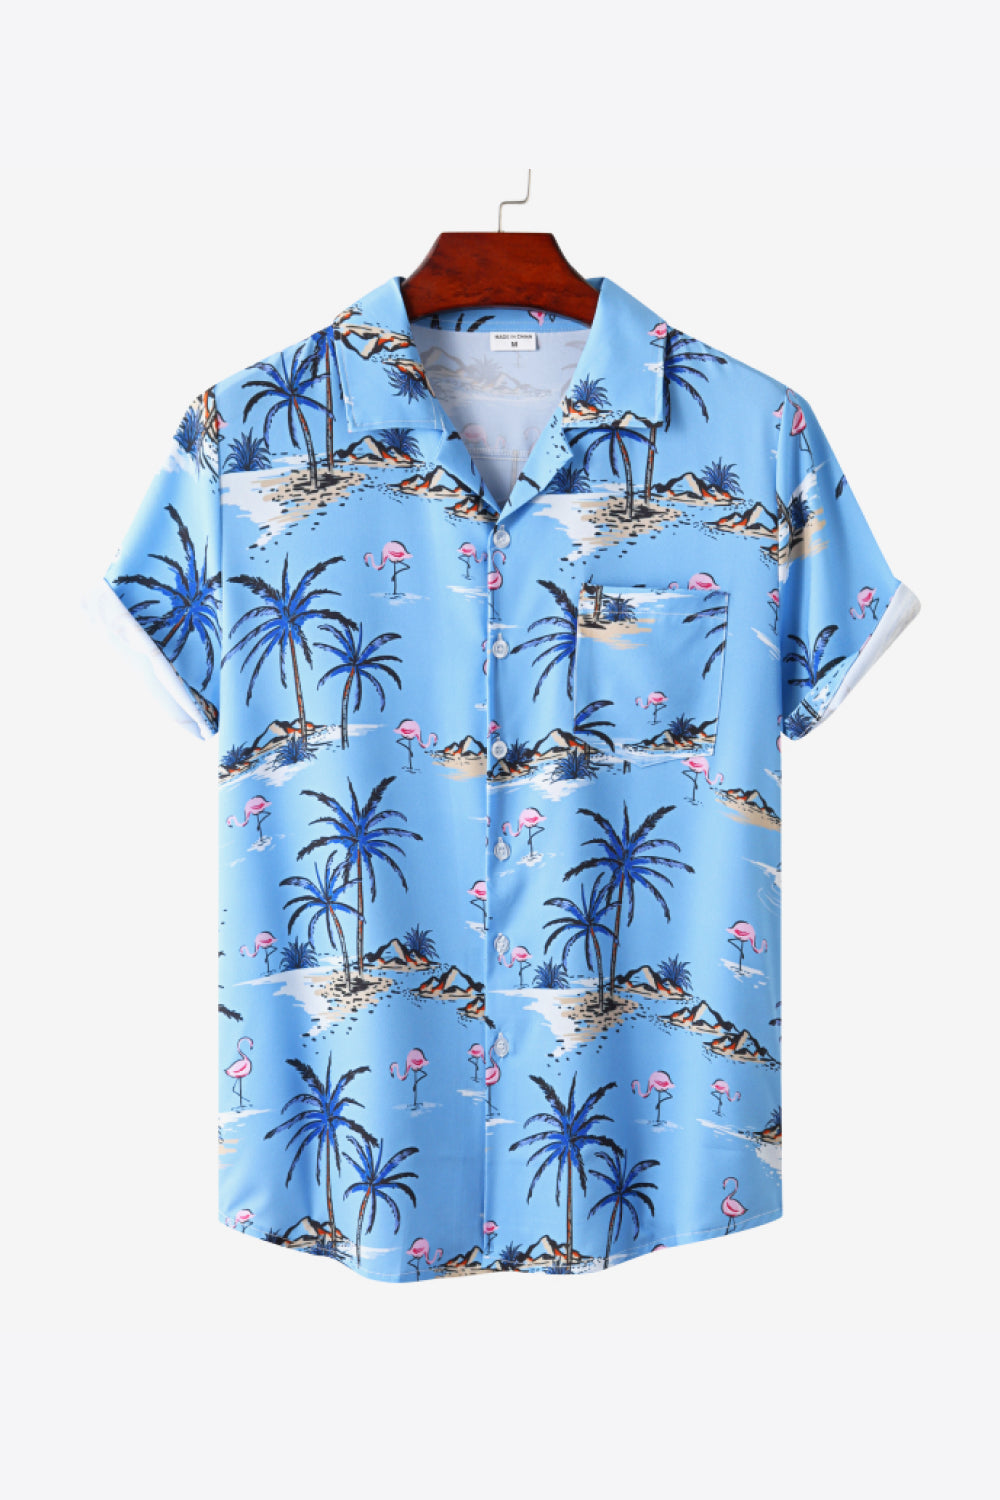 The best selling] Nashville Predators NHL Flower Unisex All Over Printed Hawaiian  Shirt